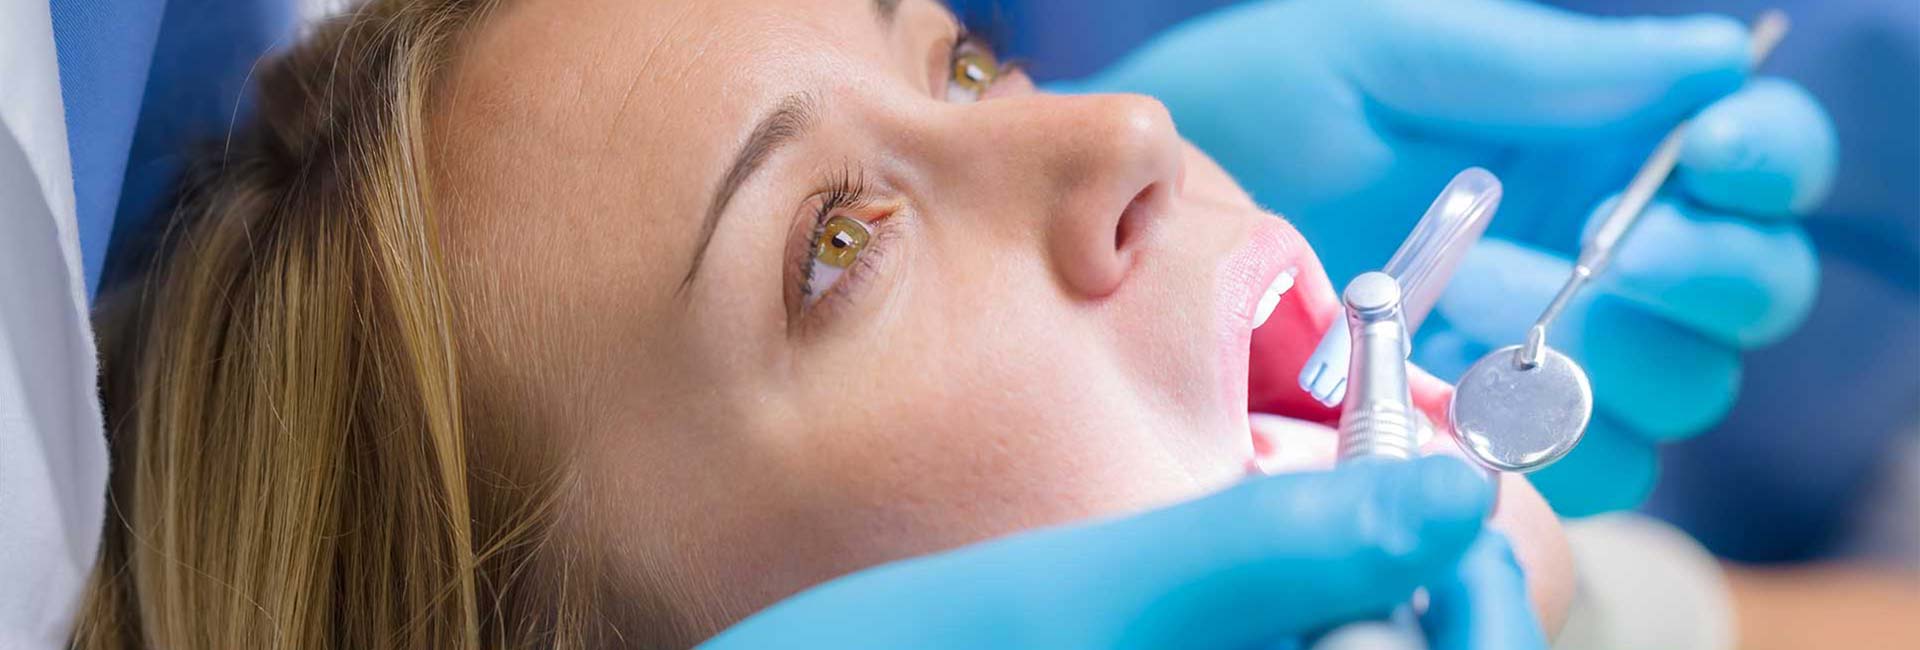 Woman getting a dental examination